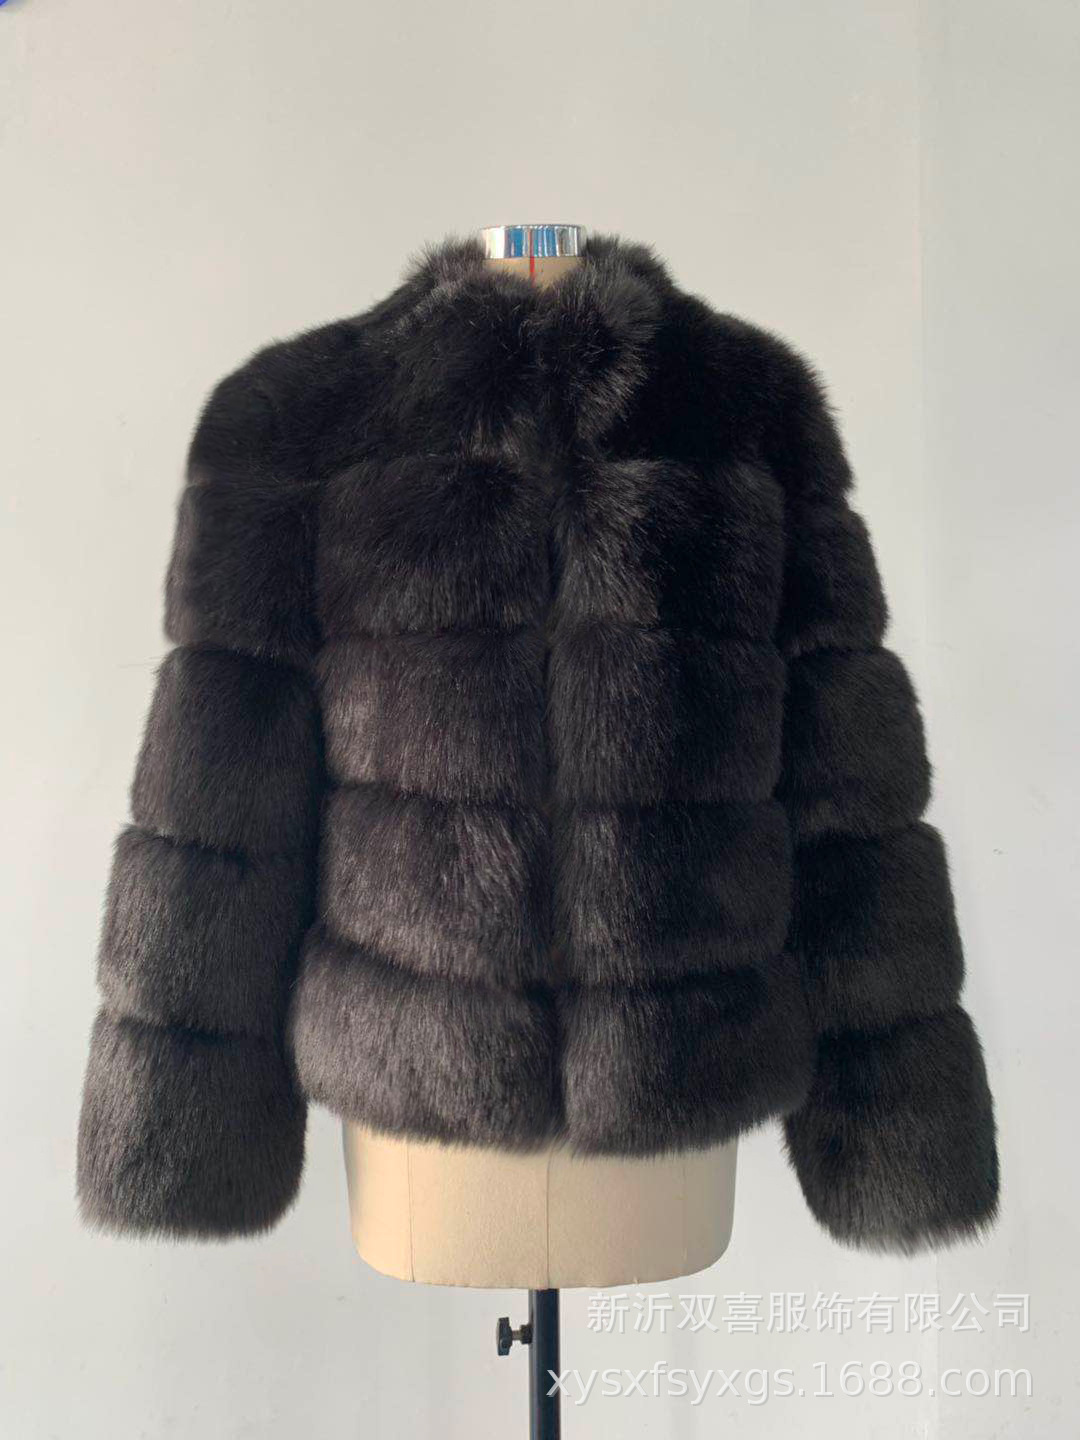 Inverno grosso quente casaco de pele feminina luxo falso raposa fuzzy casaco feminino gola falsa jaqueta de pele preto outerwear